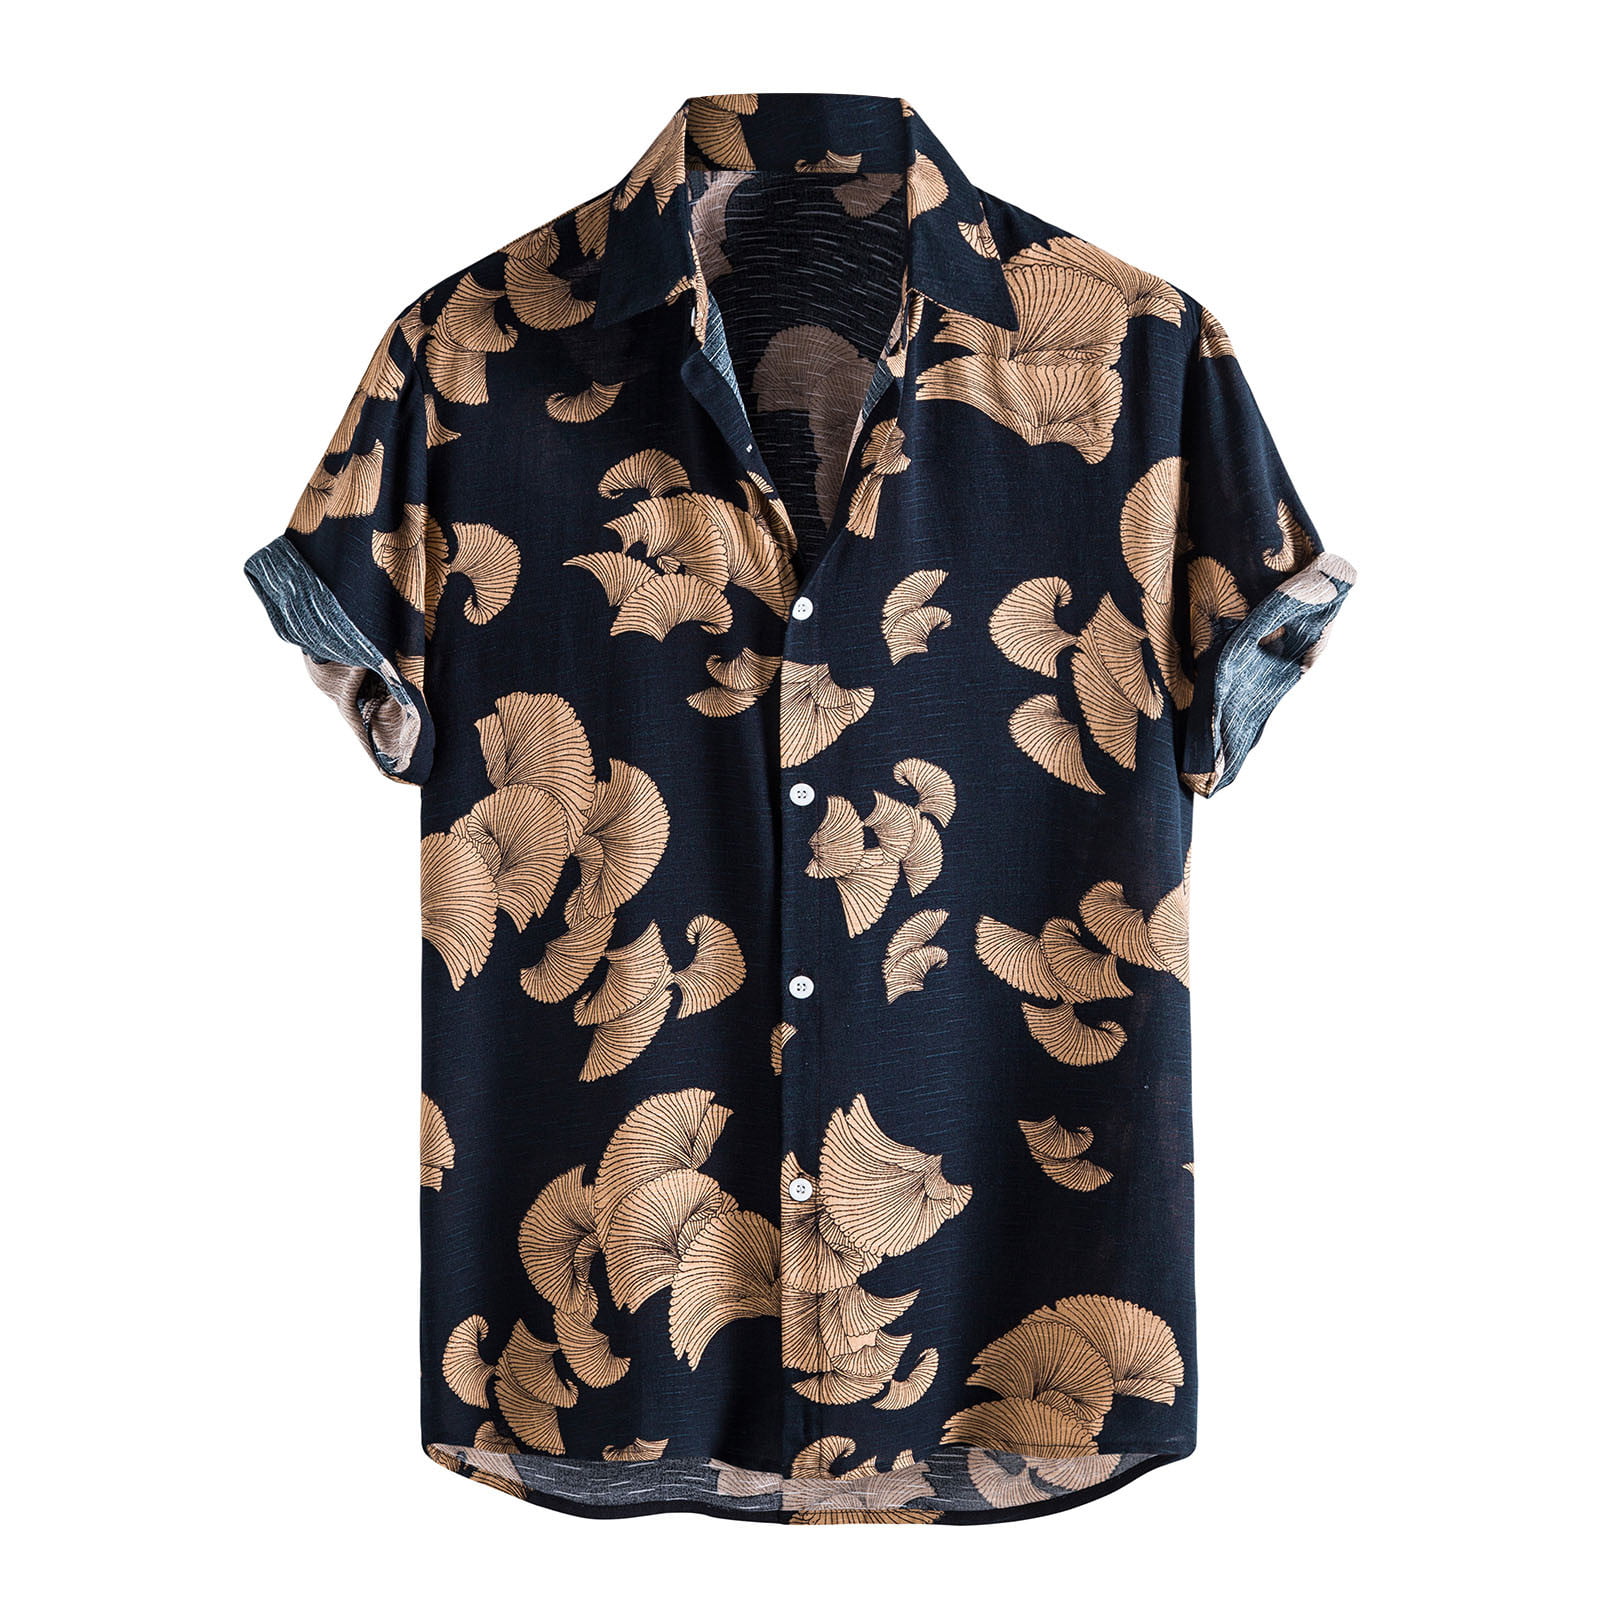 CTEEGC Hawaiian Shirt for Men Clearance Men's Summer Fashion Short ...